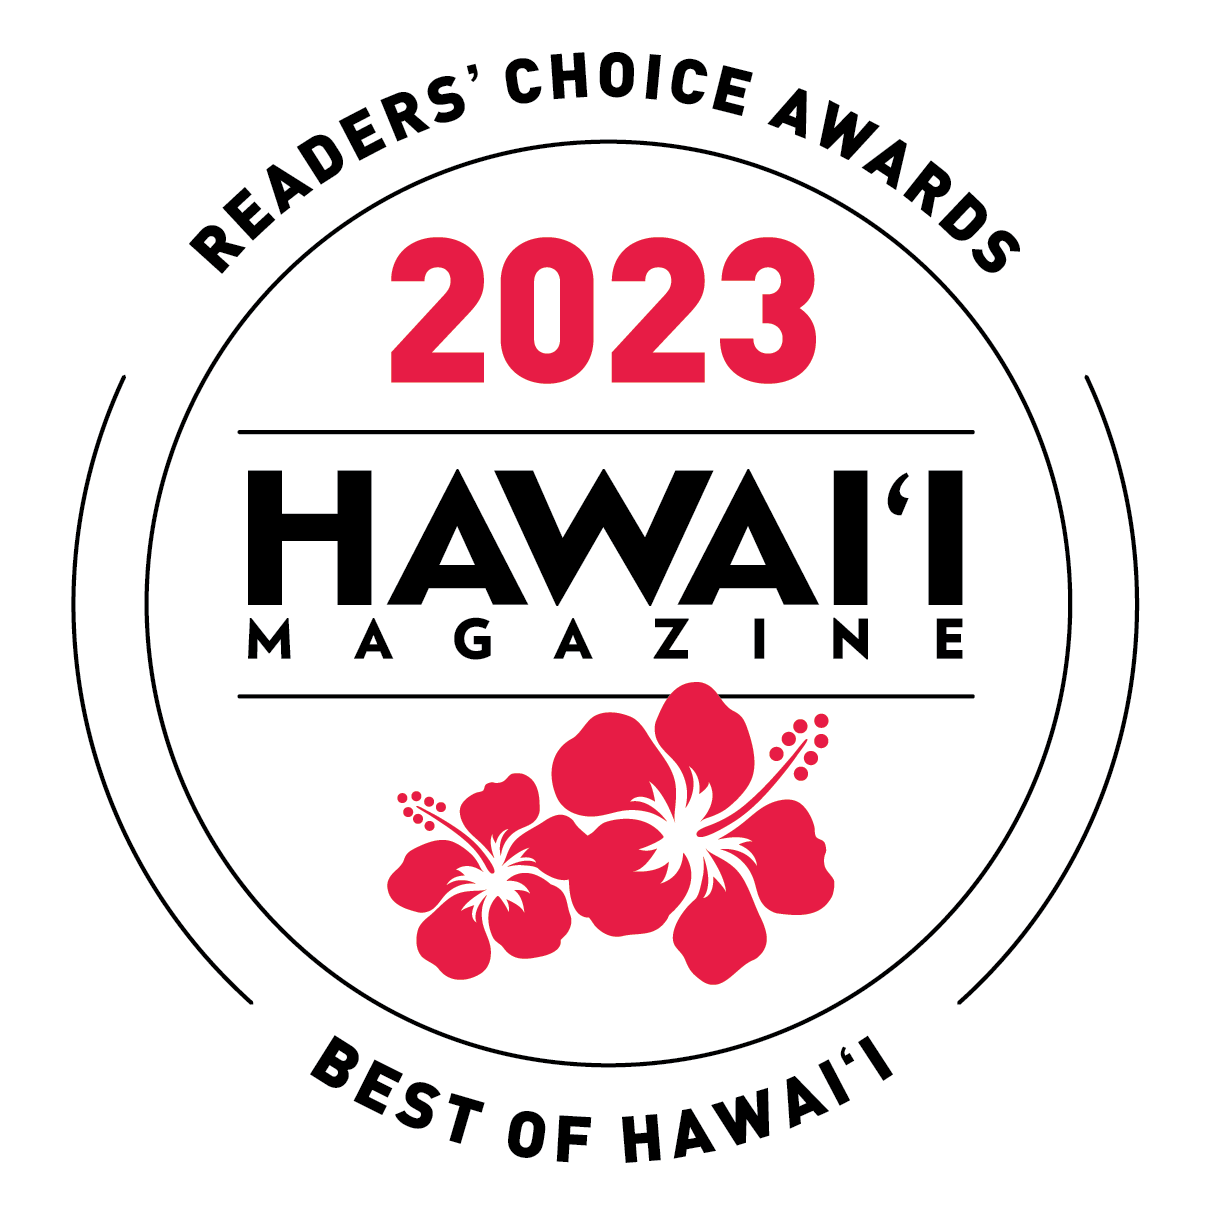 Hawaii Magazine 2023 Reader's Choice Awards